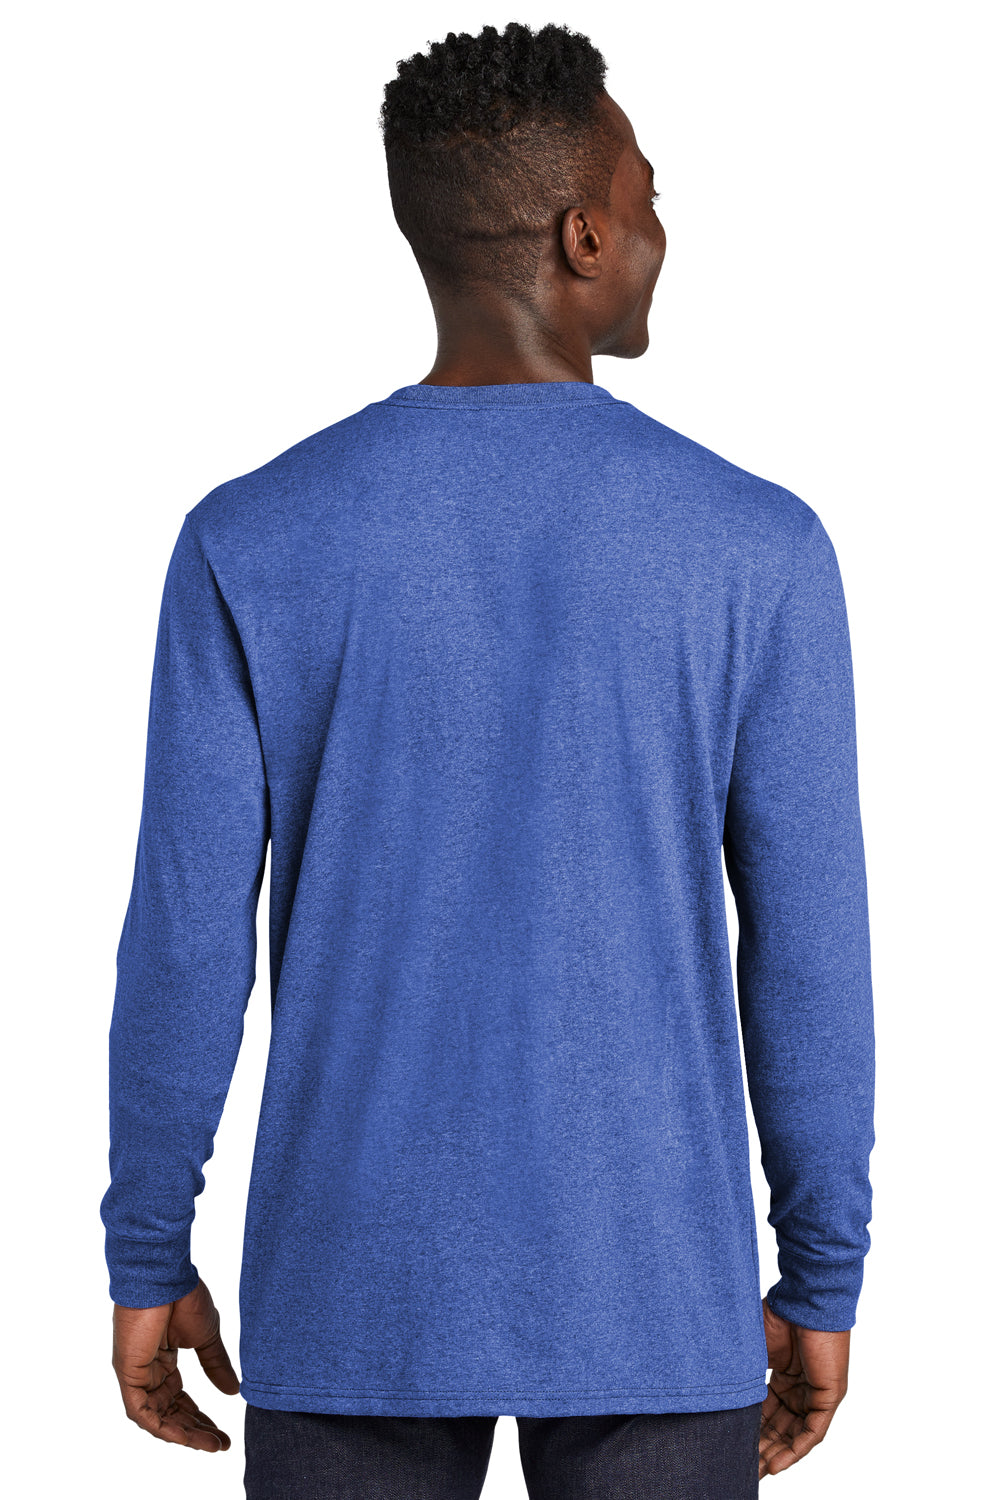 Allmade AL6204 Mens Recycled Long Sleeve Crewneck T-Shirt Heather Royal Blue Model Back